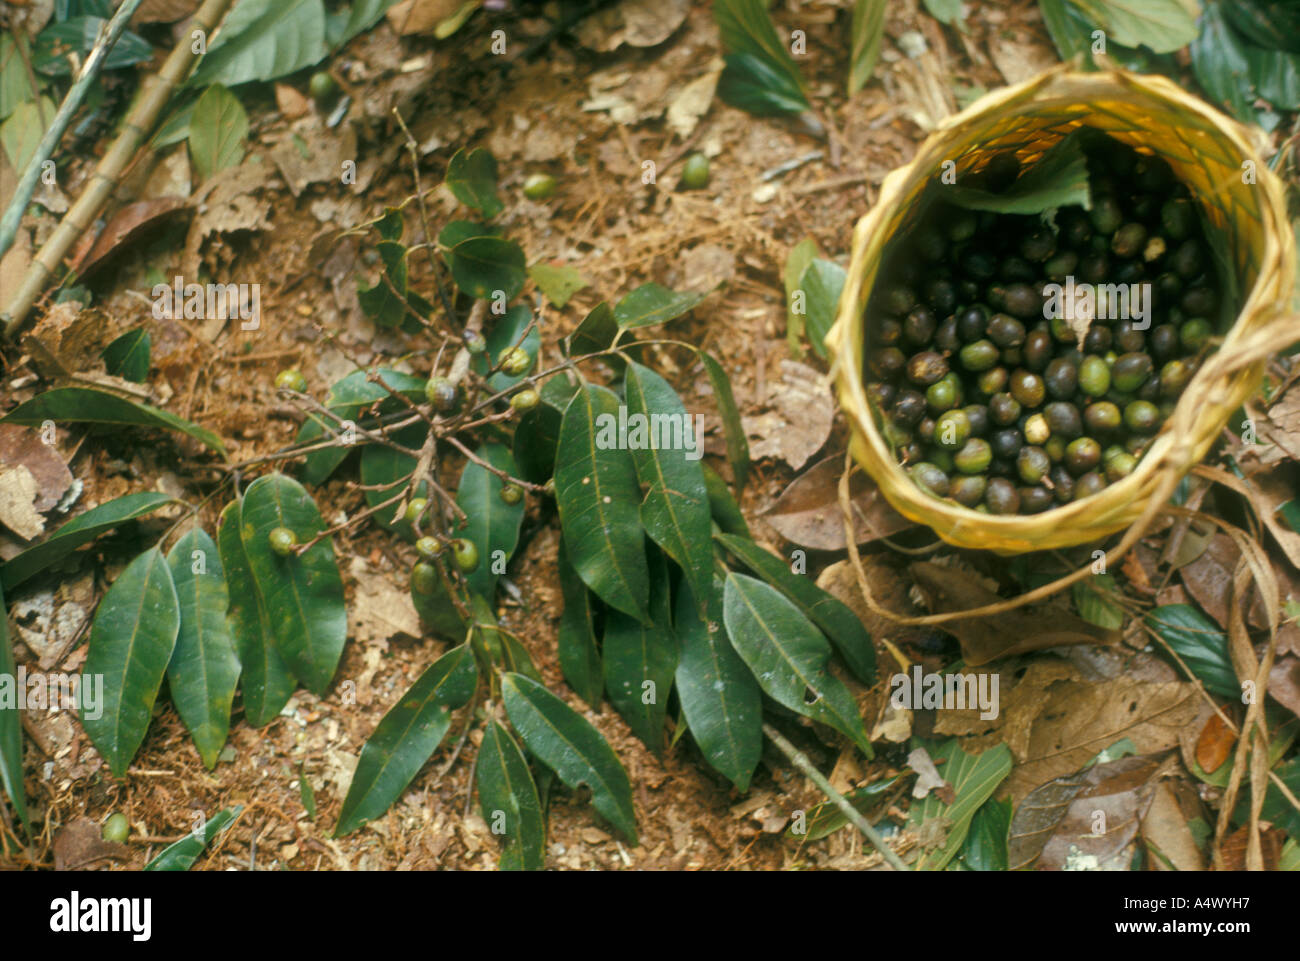 Gathering of wild fruit eaten after light cooking Dacryodes sp Burseraceae by Indians of Venezuelan rainforest. Stock Photo